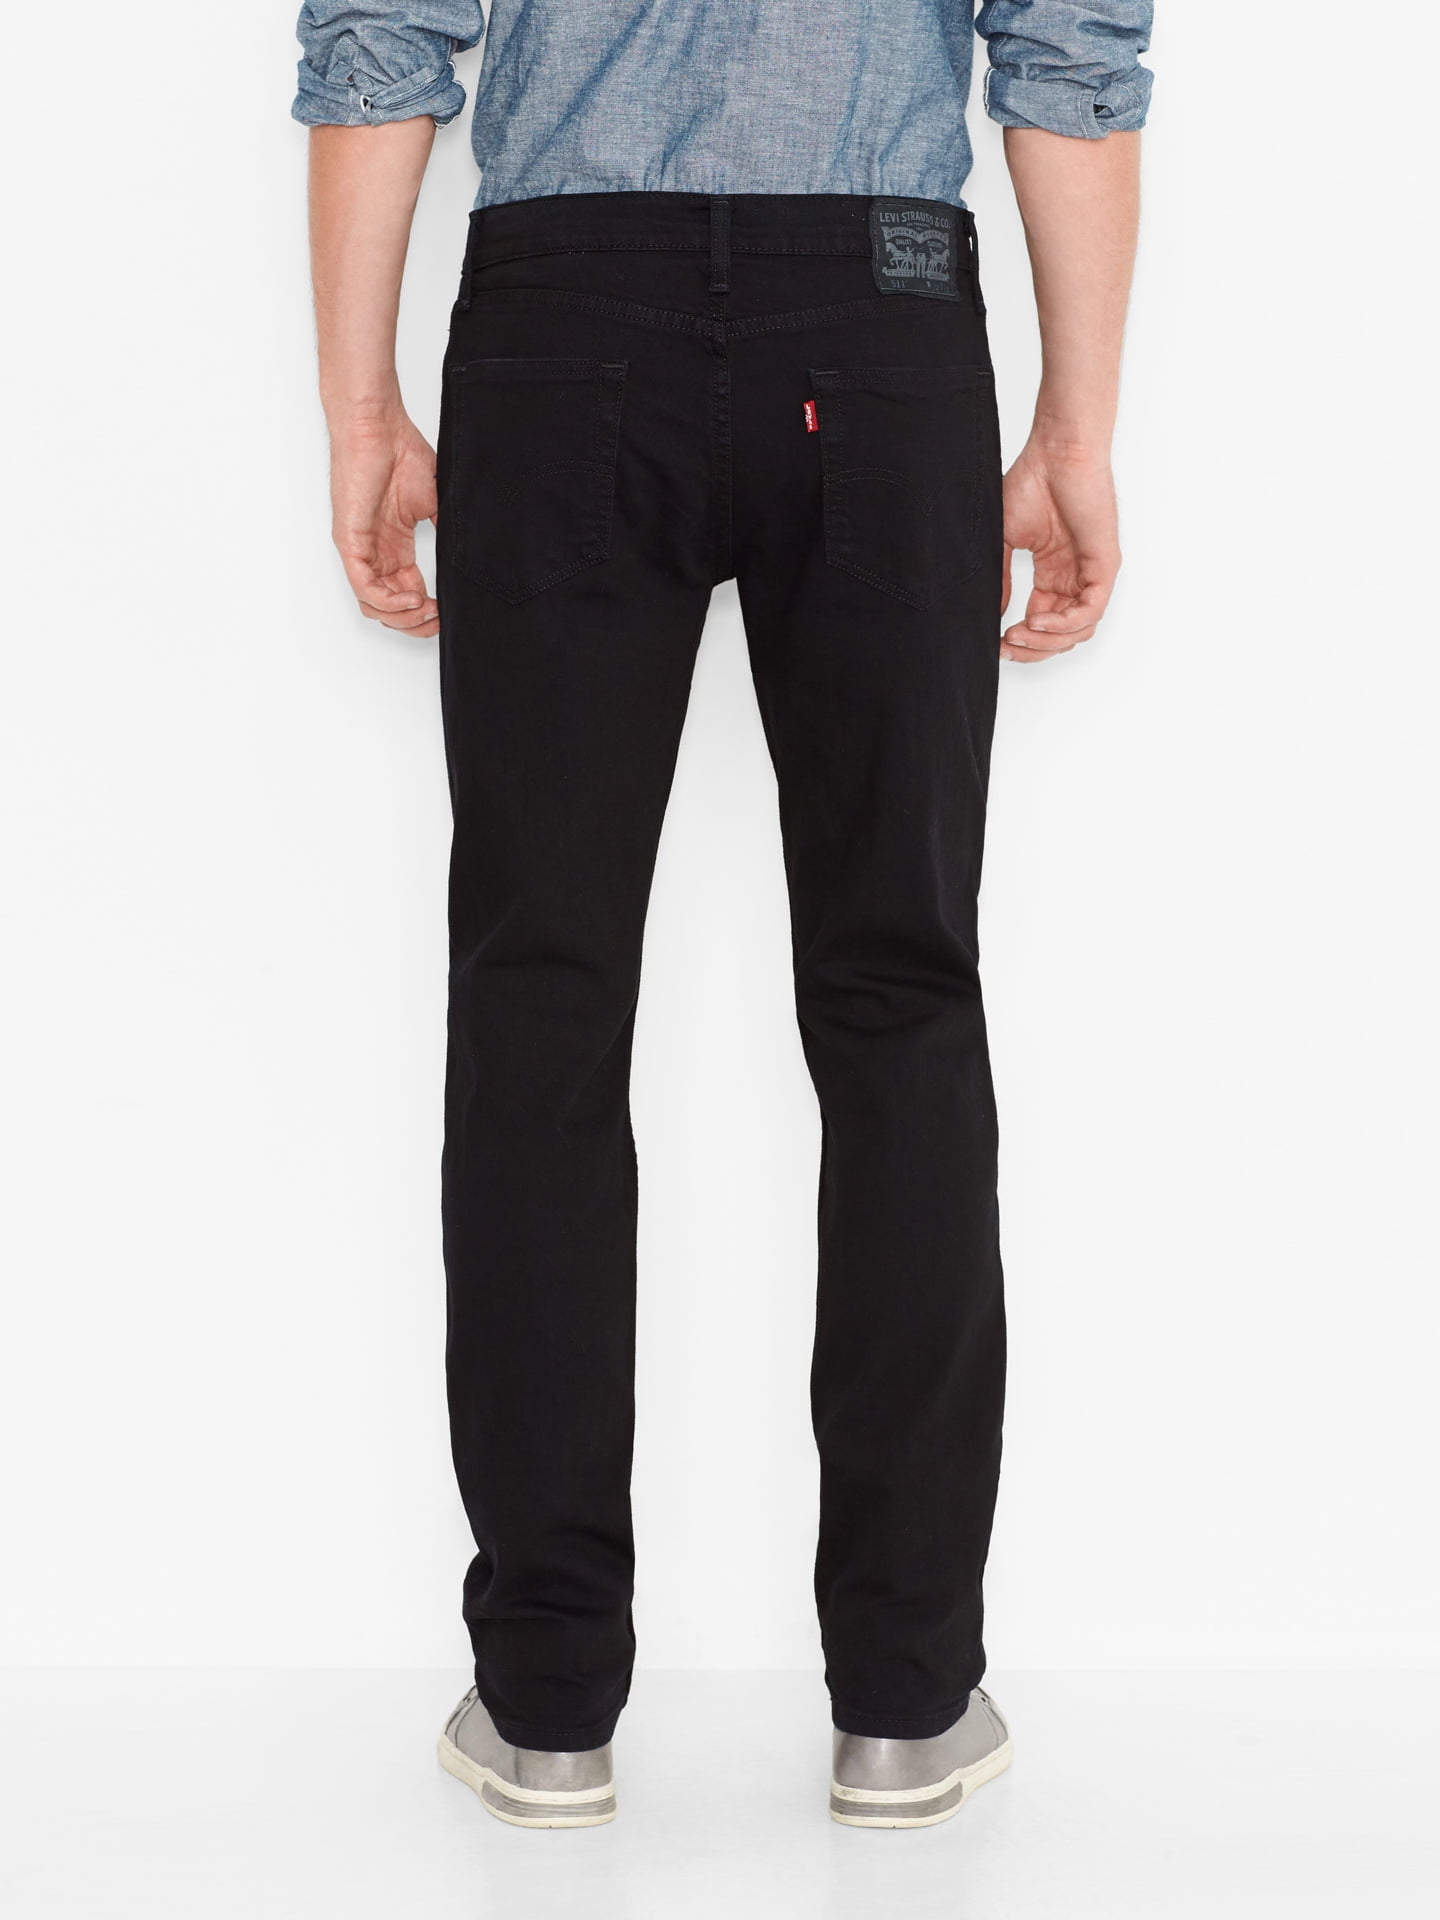 Levi's 511 Men's Slim Fit Stretch Jeans - Black, Black Stretch, 31X34 -  